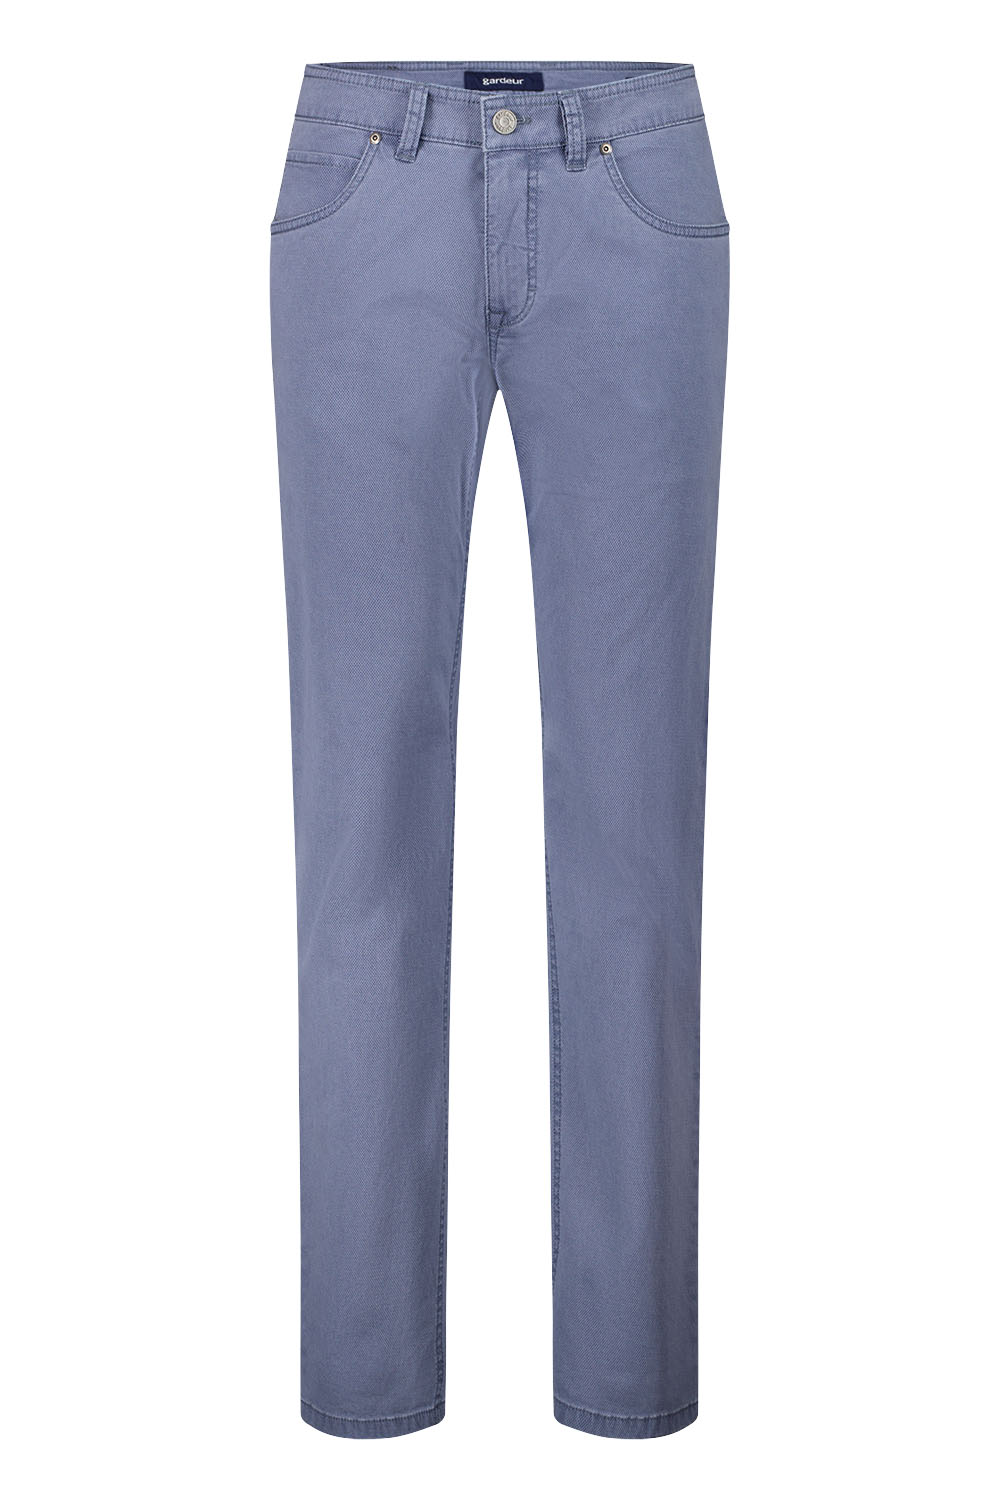 Gardeur - Bill-3 Modern Fit 5-Pocket Jeans Blauw - 33/34 - Heren